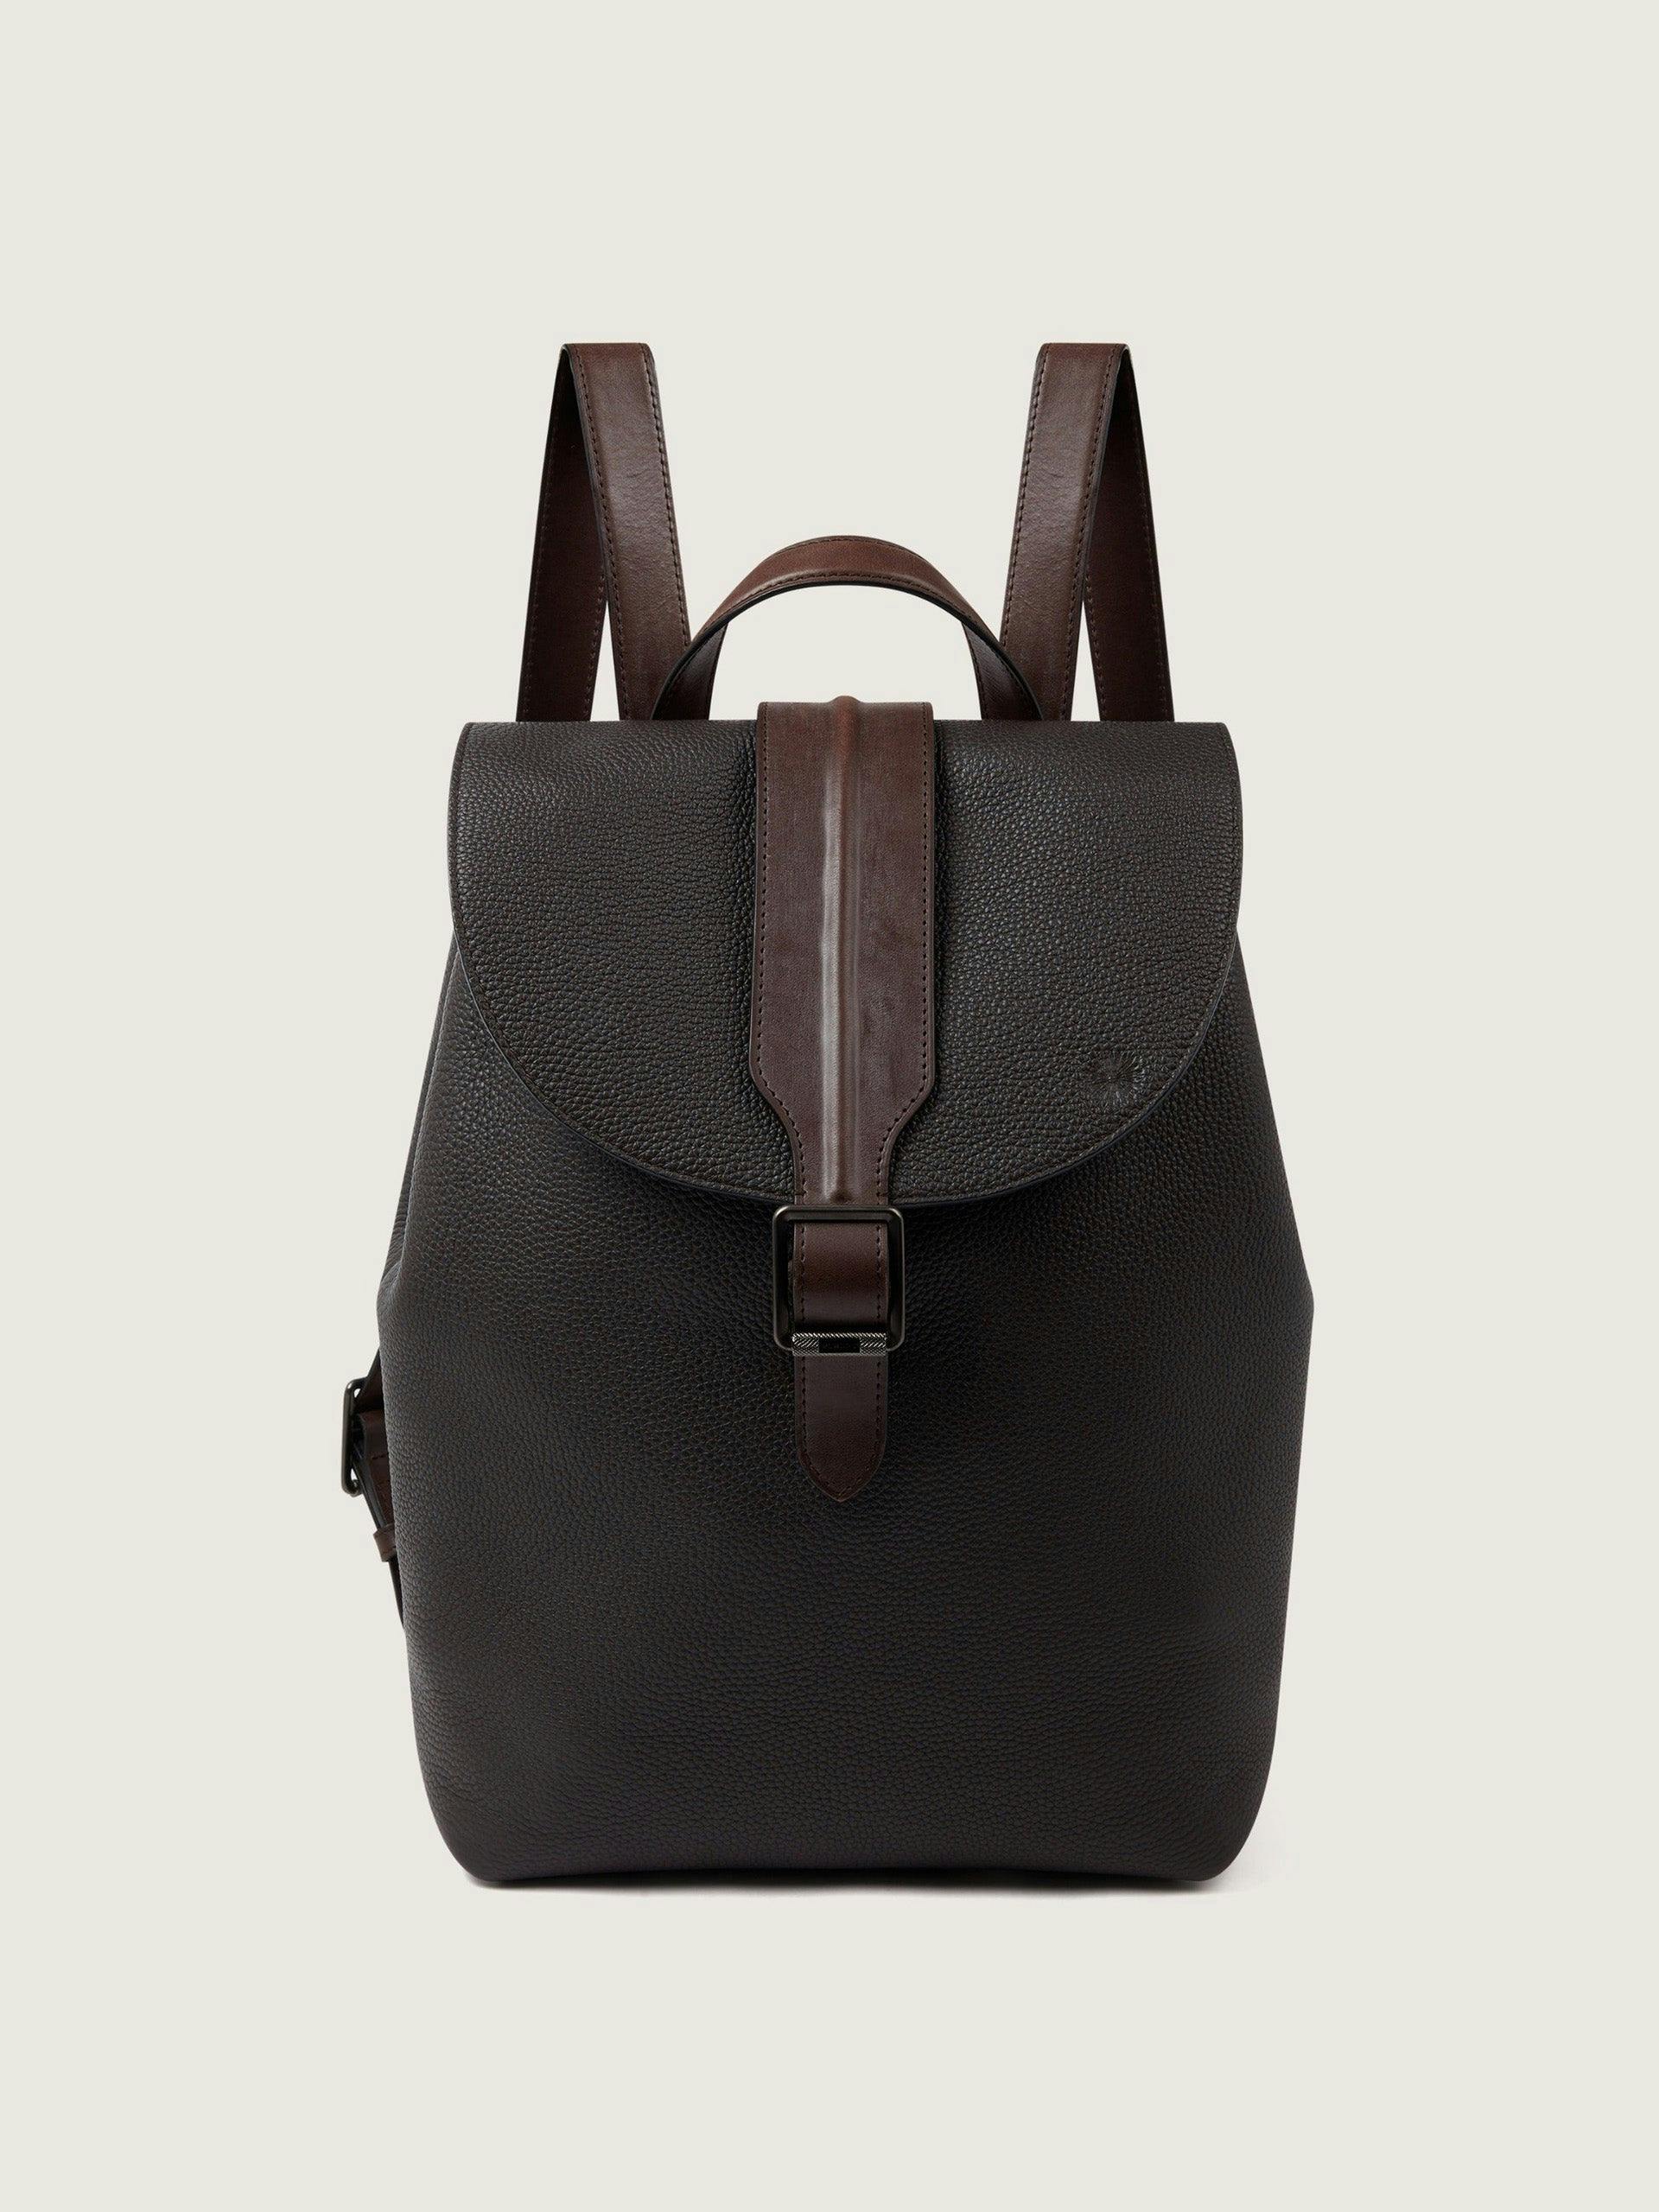 Leather Ghillie backpack in dark brown